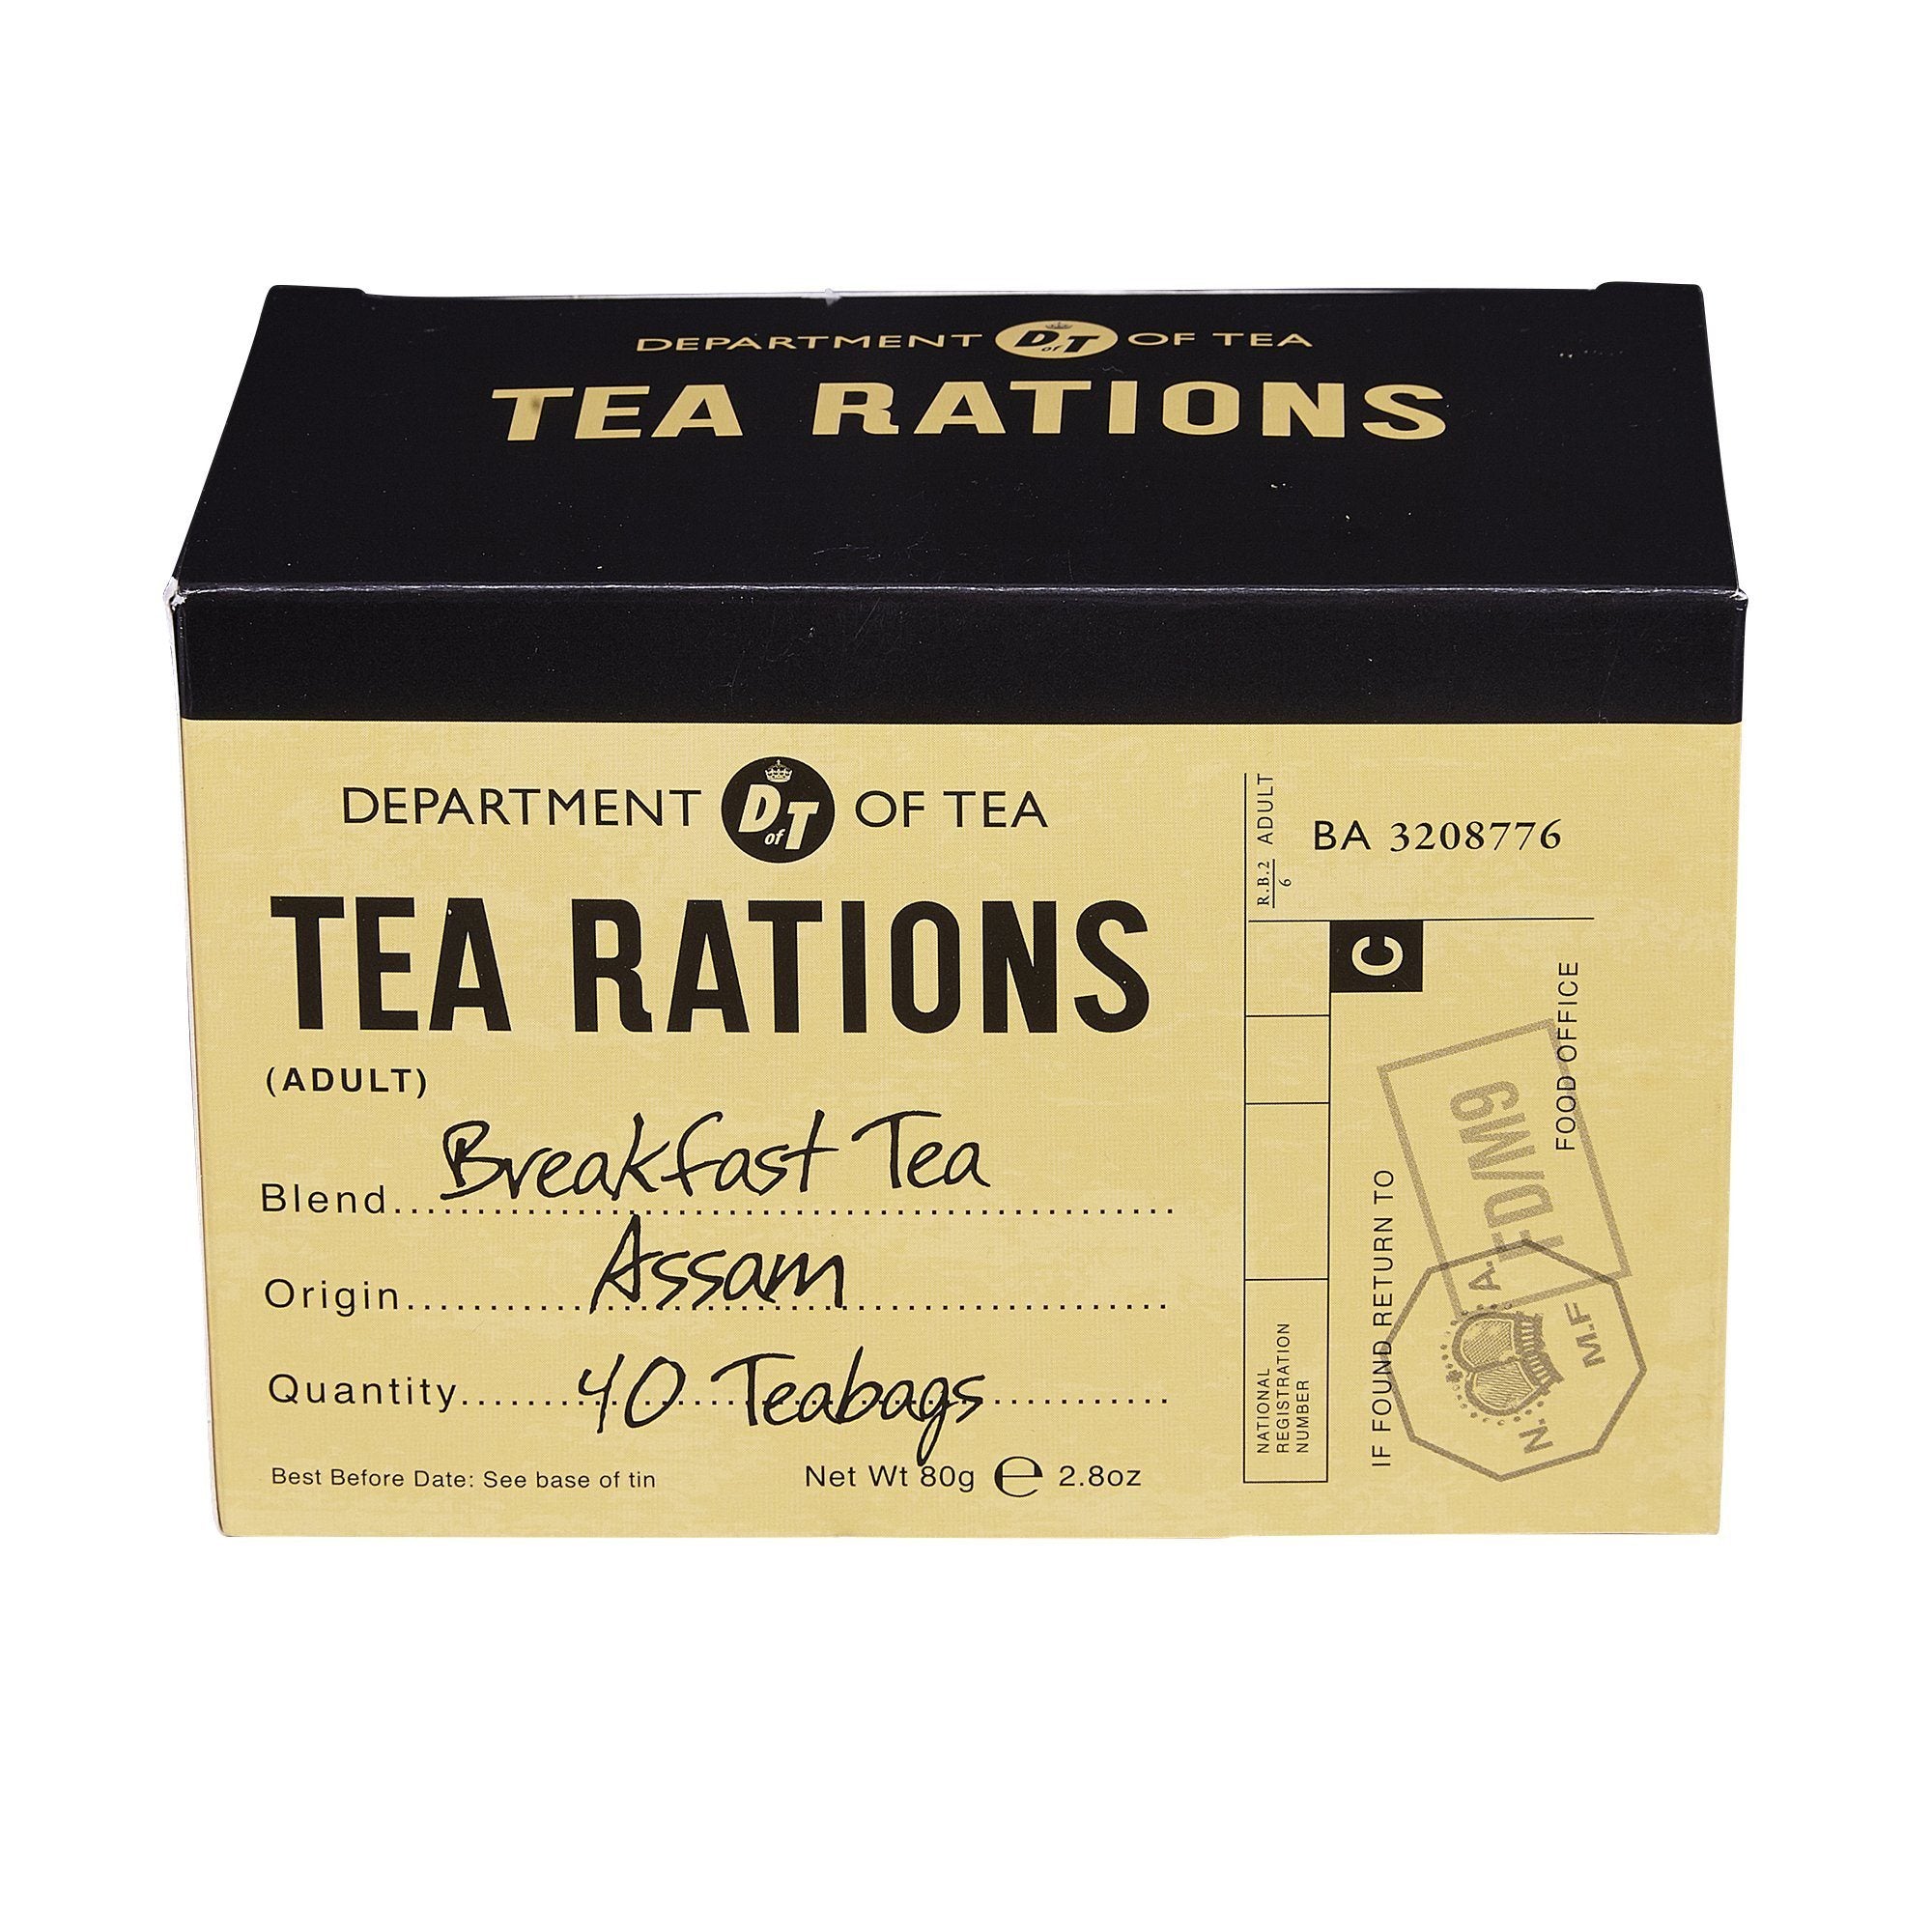 Tea Rations Tea Box With 40 English Breakfast Teabags | New English ...